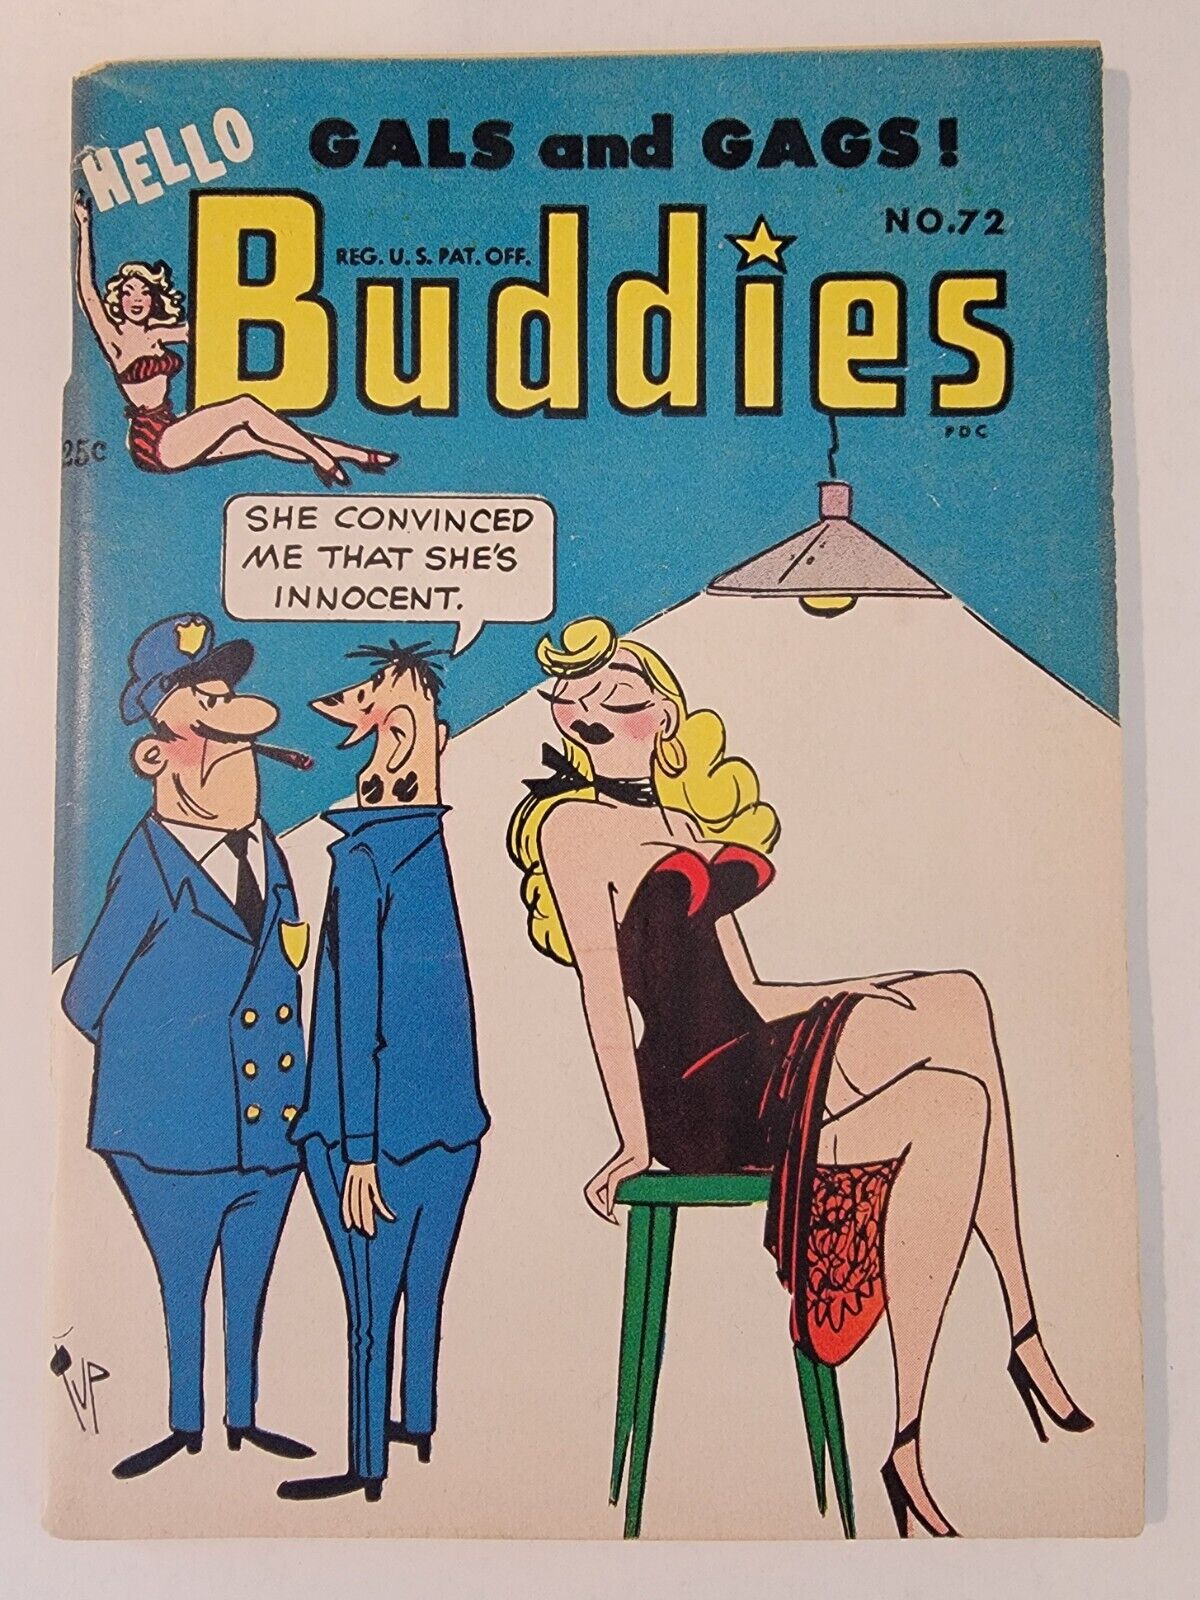 Hello Buddies #64 VF+ Feat: Joan Collins HIGH GRADE 1955 GGA Humor ~ Golden Age